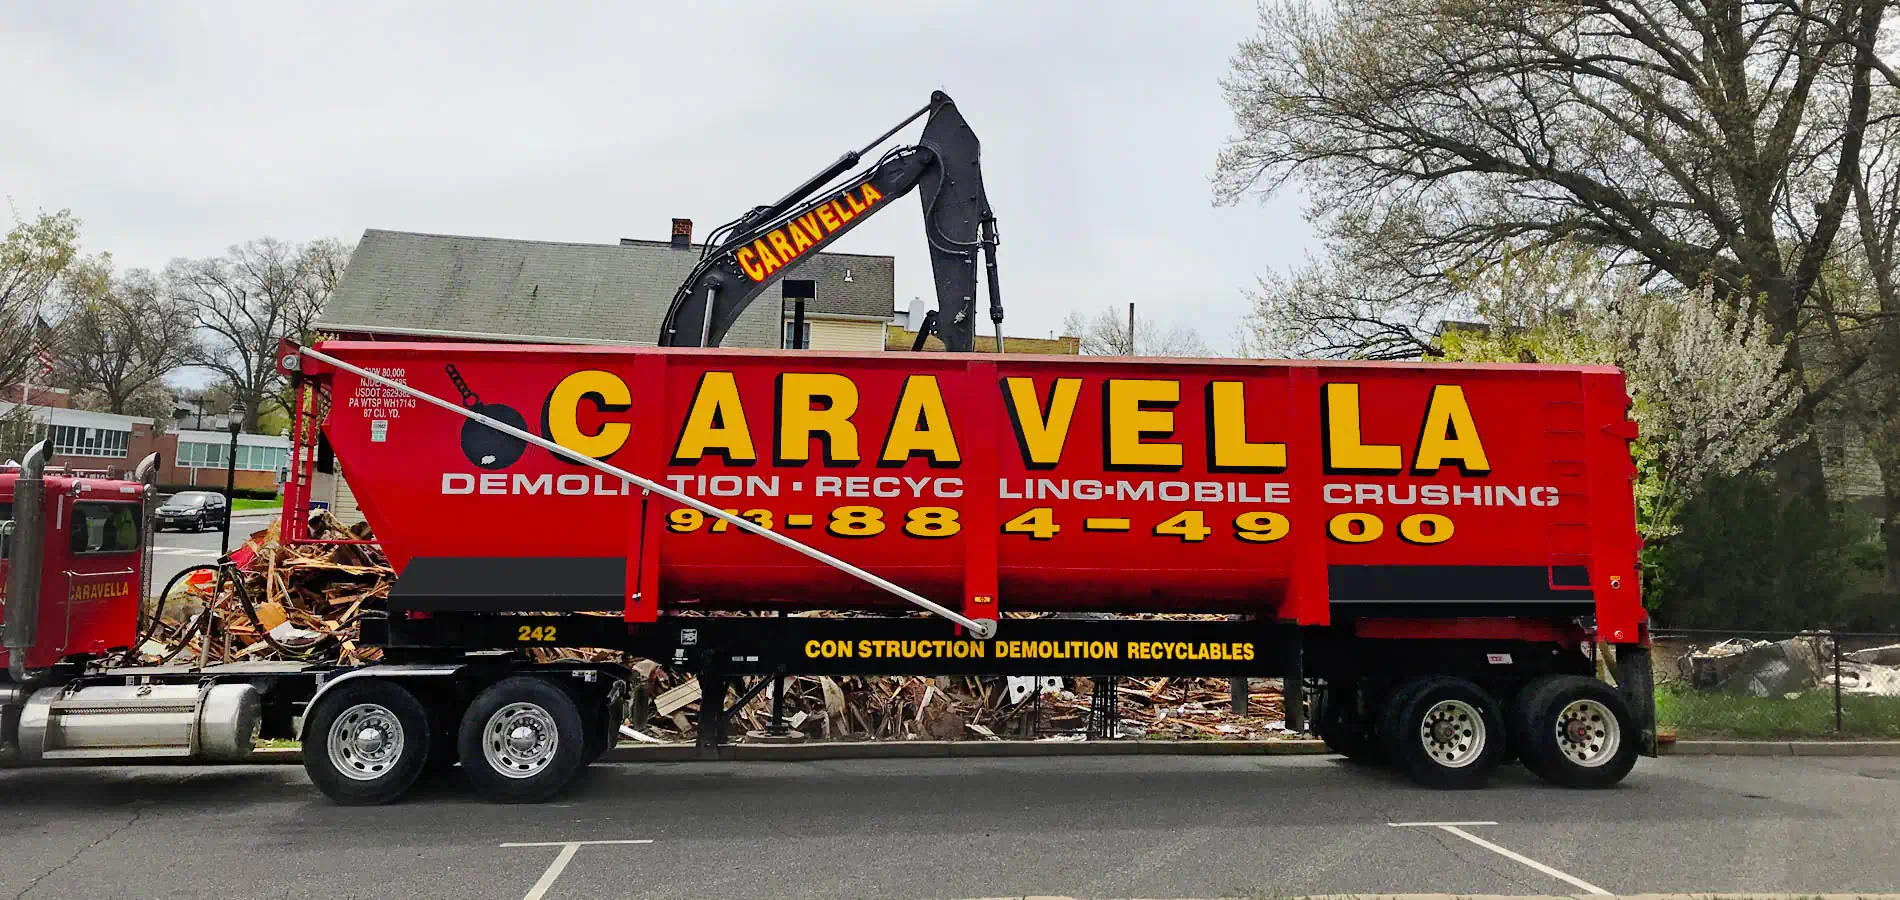 Demolition Services in Monmouth County, NJ | Caravella Demolition